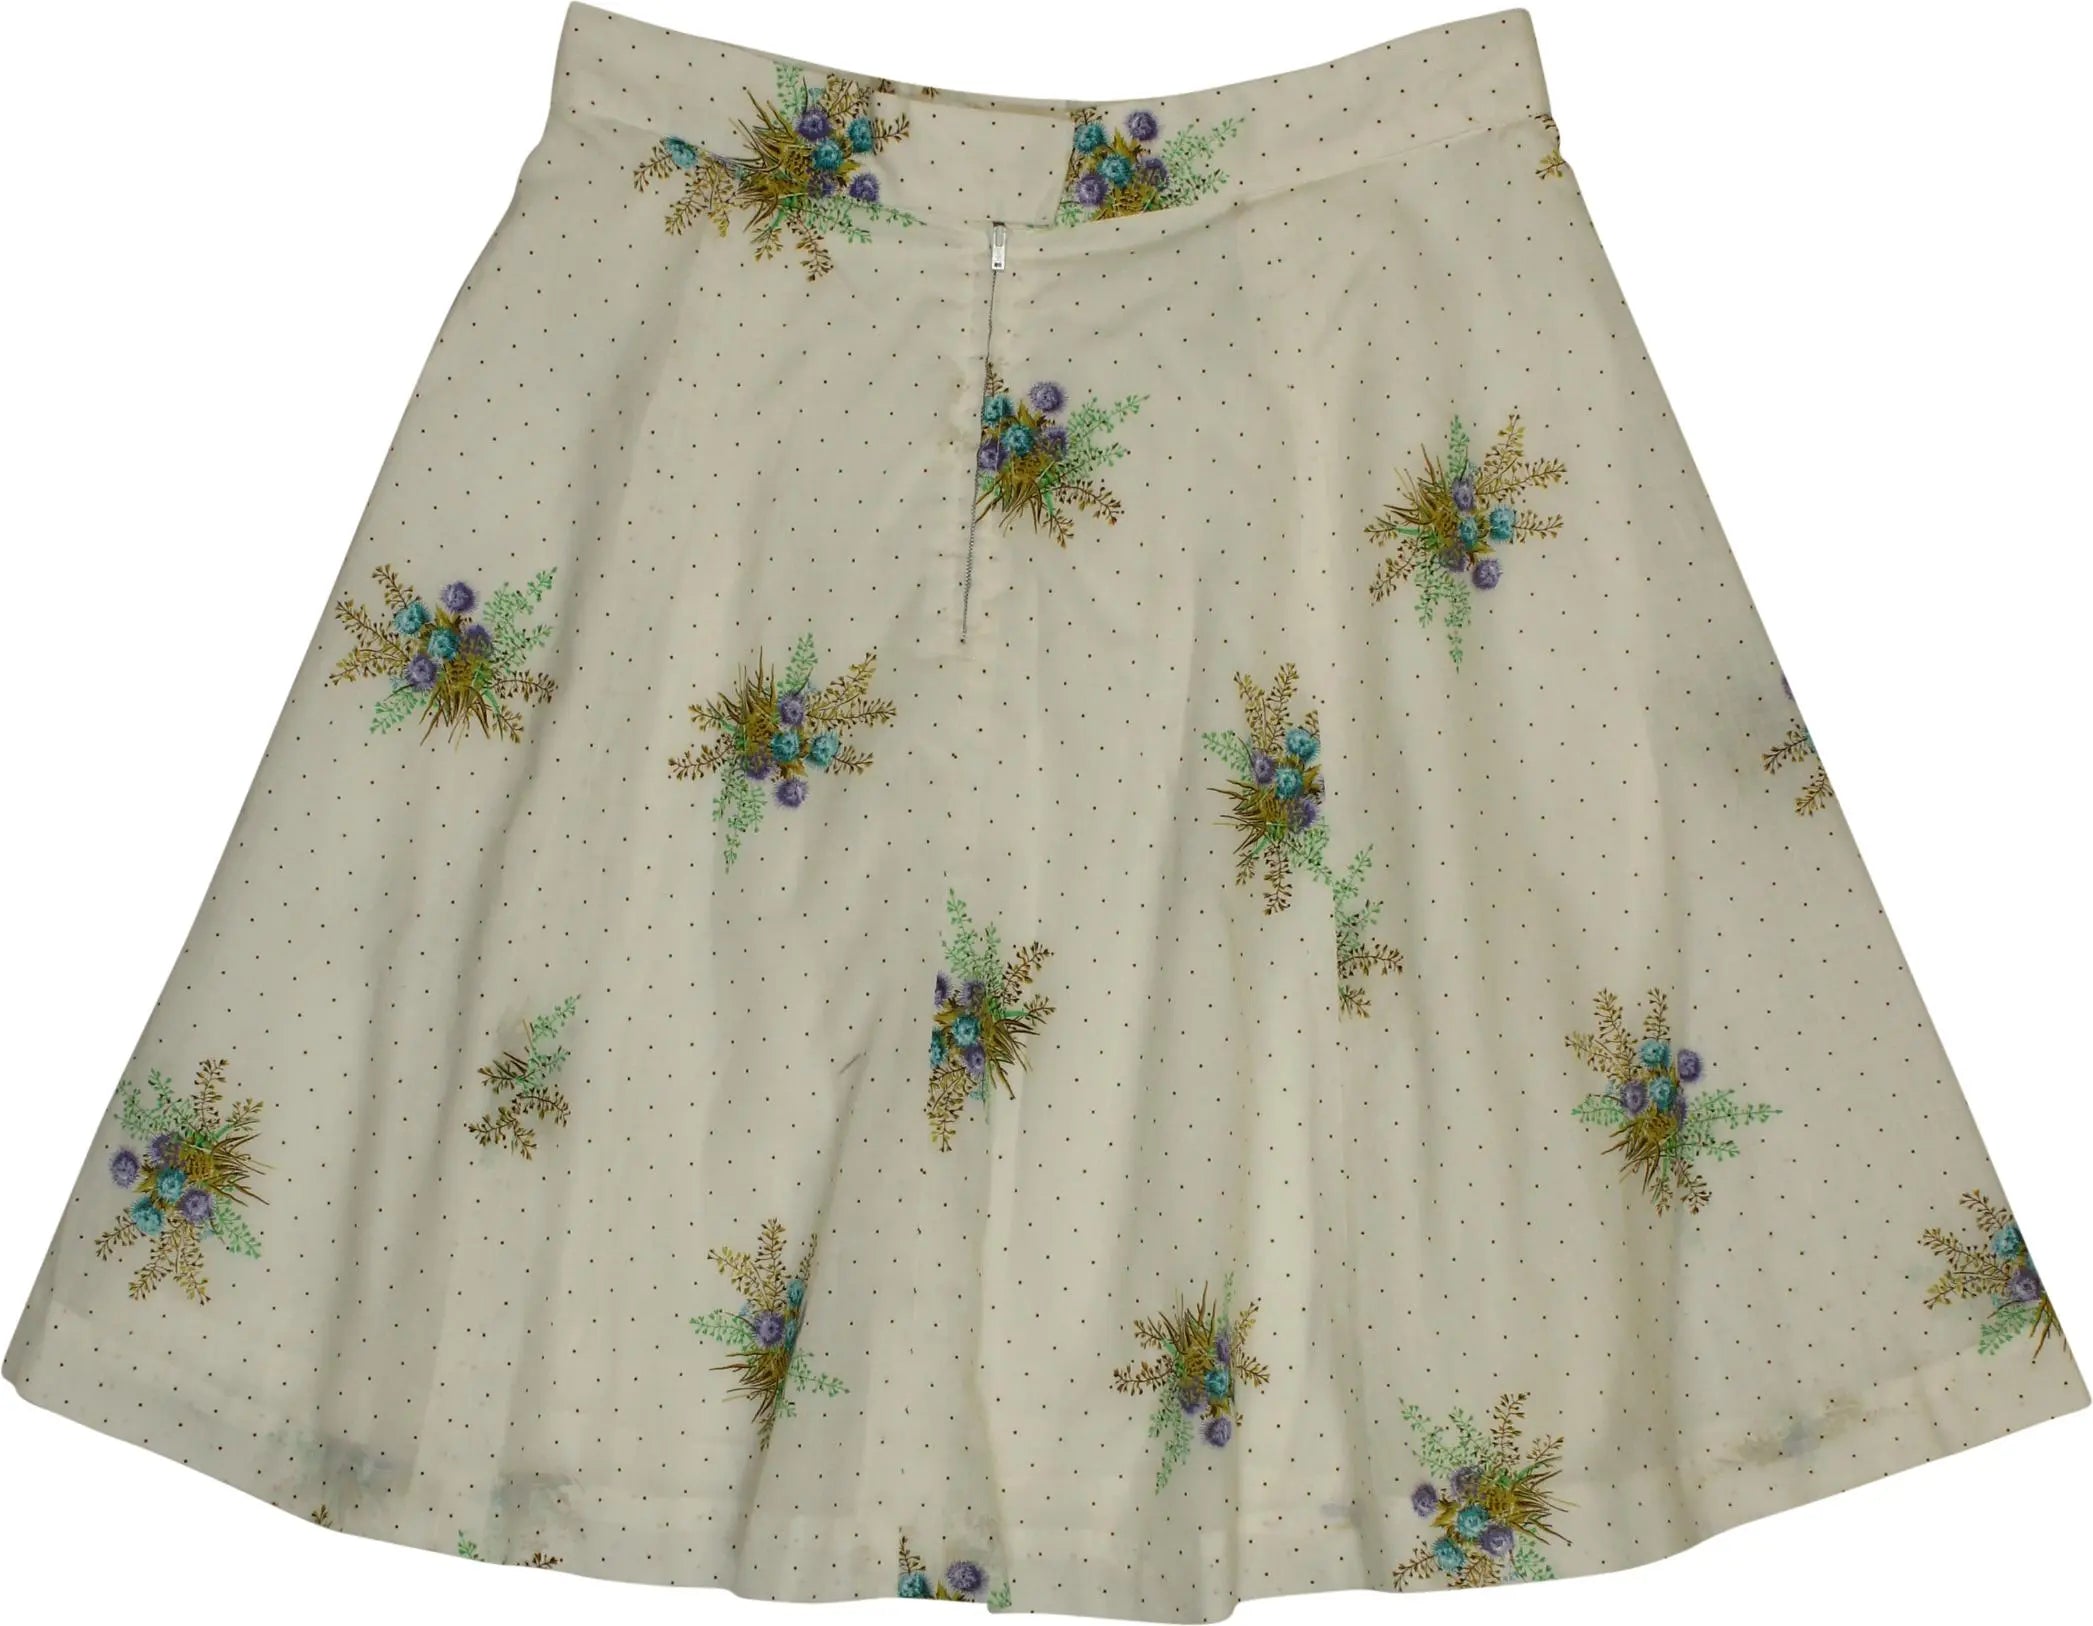 Handmade - Handmade Flower Skirt- ThriftTale.com - Vintage and second handclothing